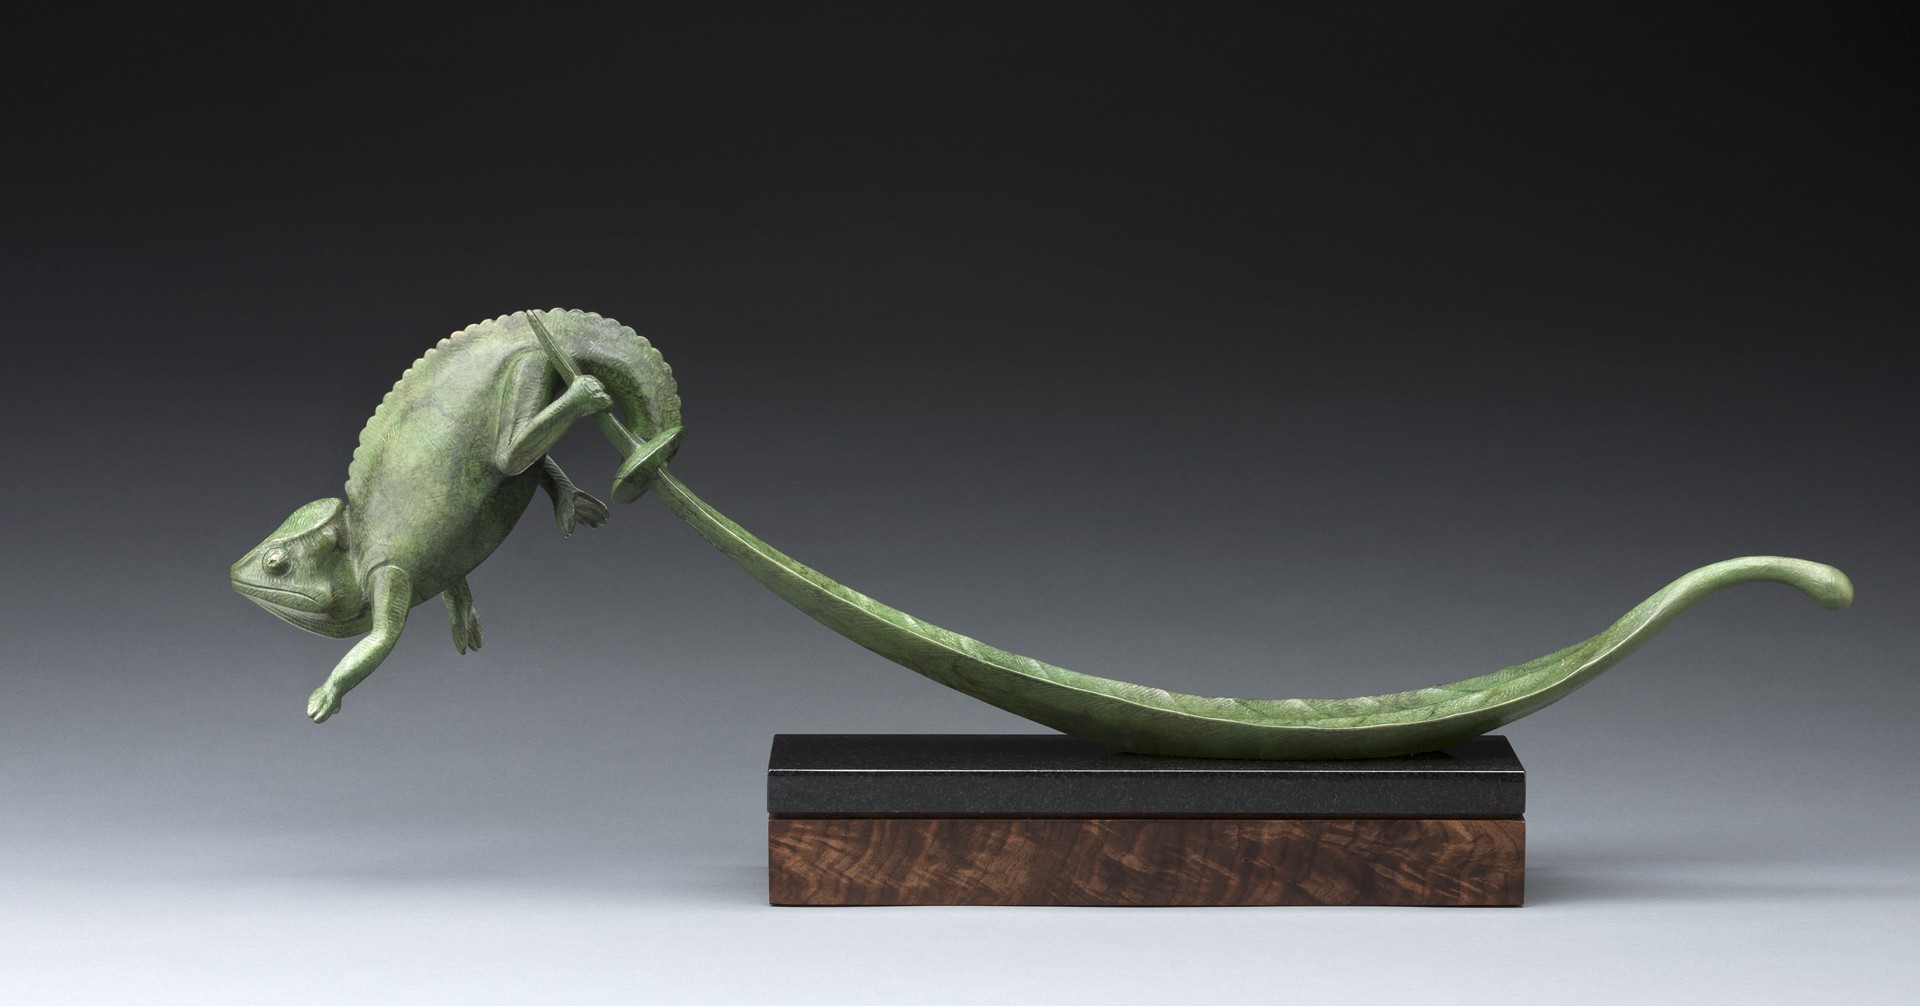 Chameleon and Leaf by Tony Hochstetler